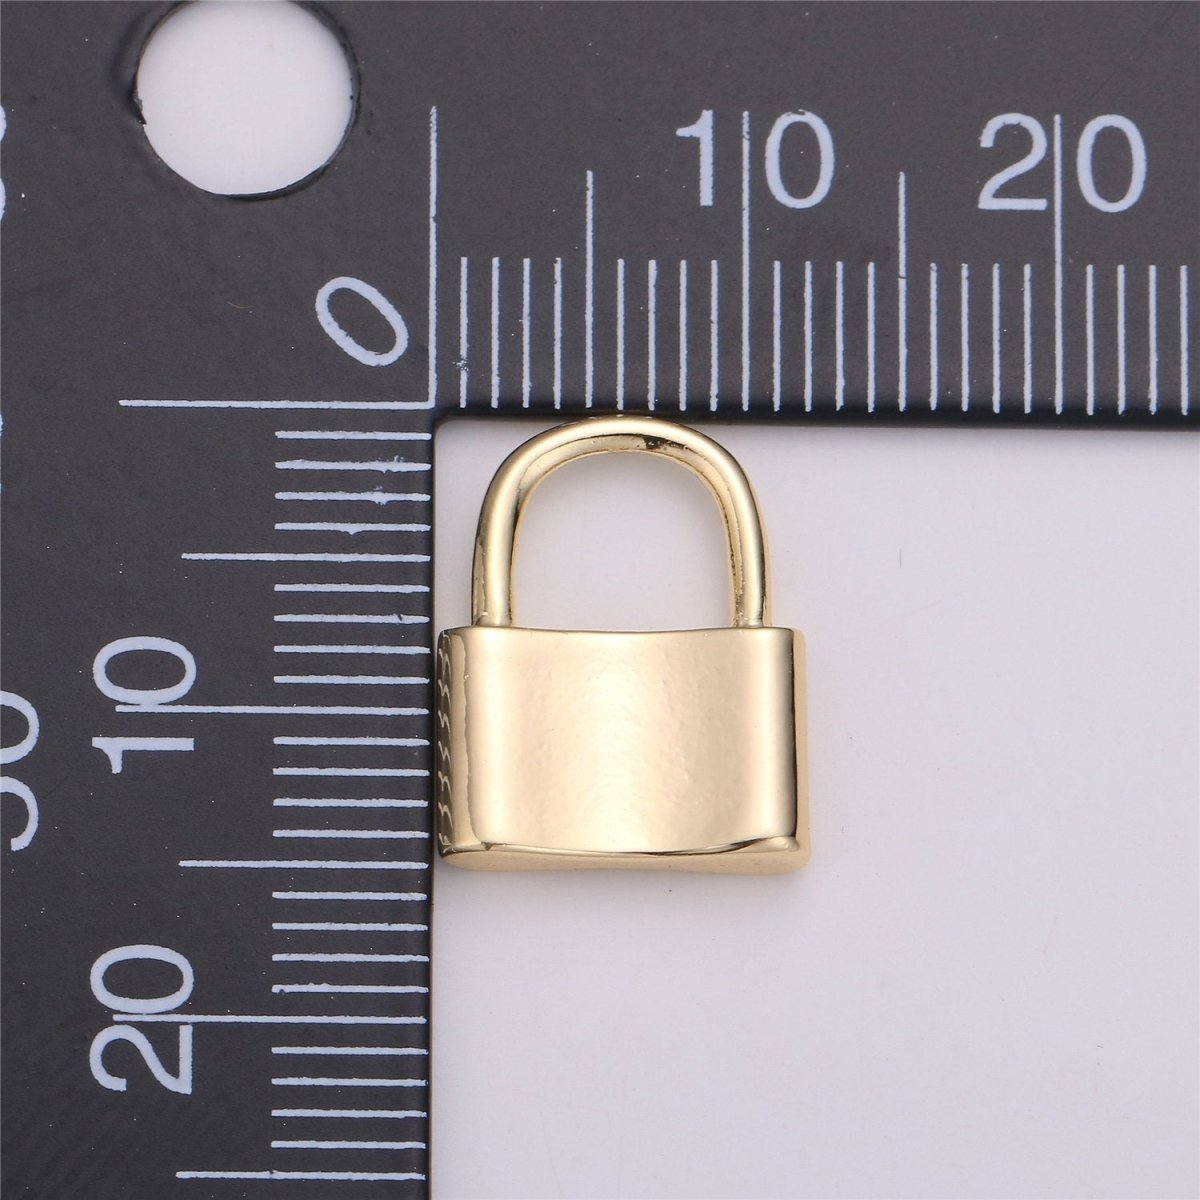 Clearance 7mm, 15mm, 20mm Dainty 18k Gold Filled Padlock Charm, Tiny Padlock charm Small lock Pendant Love Lock for Earring Necklace Bracelet Making K-114 K-040 K-149 - DLUXCA